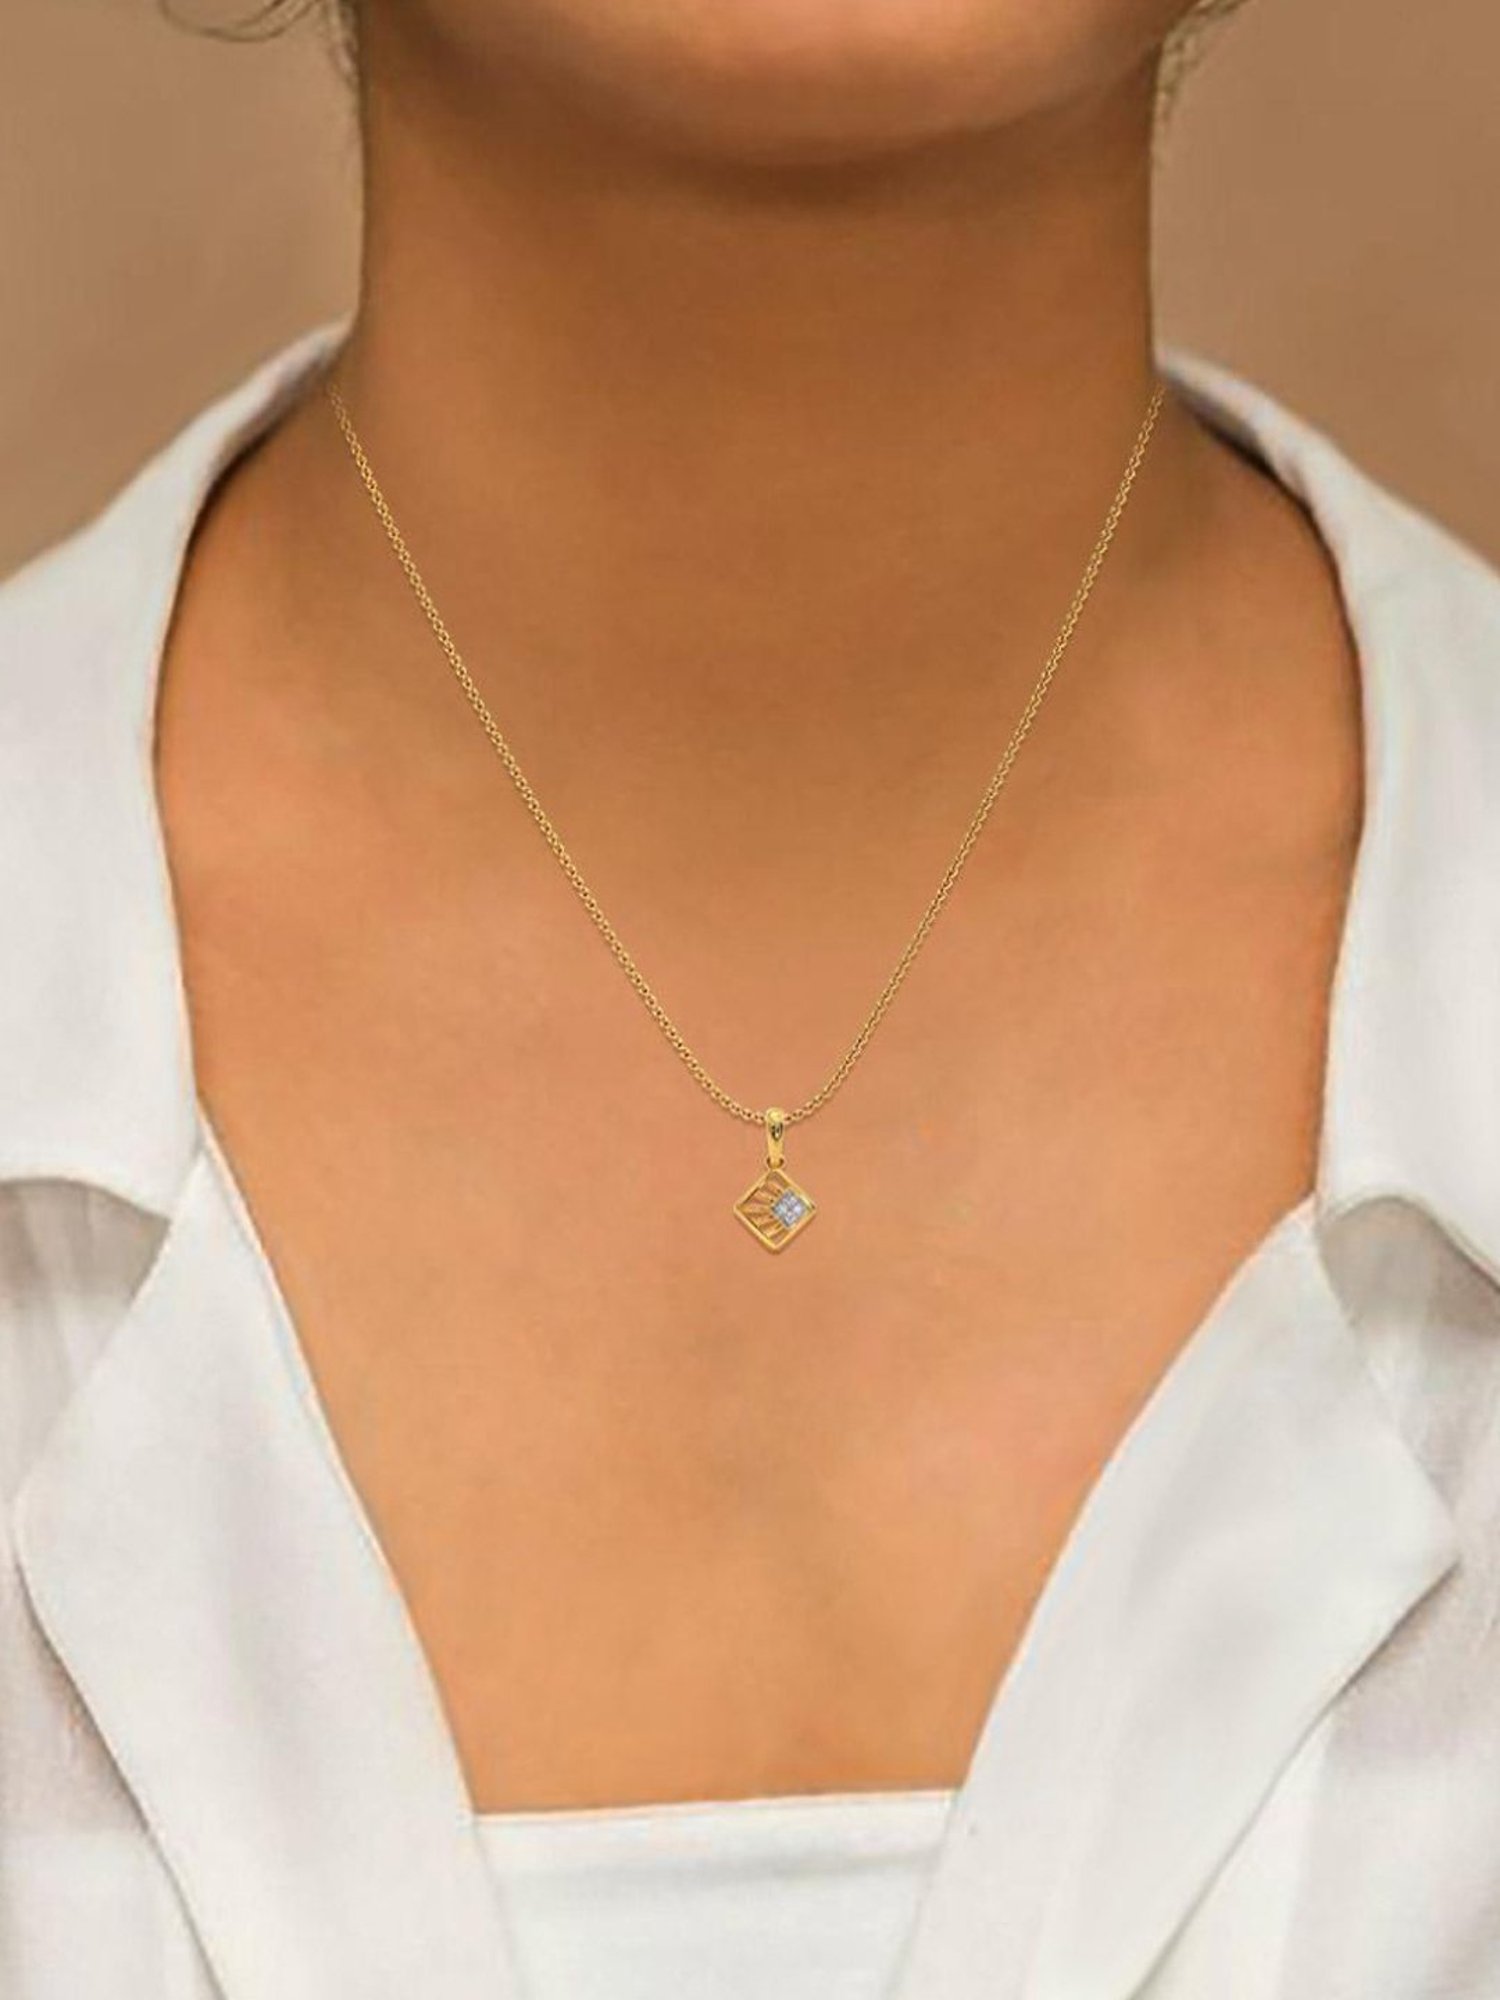 Butterfly Mini Pendant Gold-Toned Dainty Necklace, पेंडेंट हार, पेंडेंट  नेकलेस - Ayesha Fashion Private Limited | ID: 2851522679897